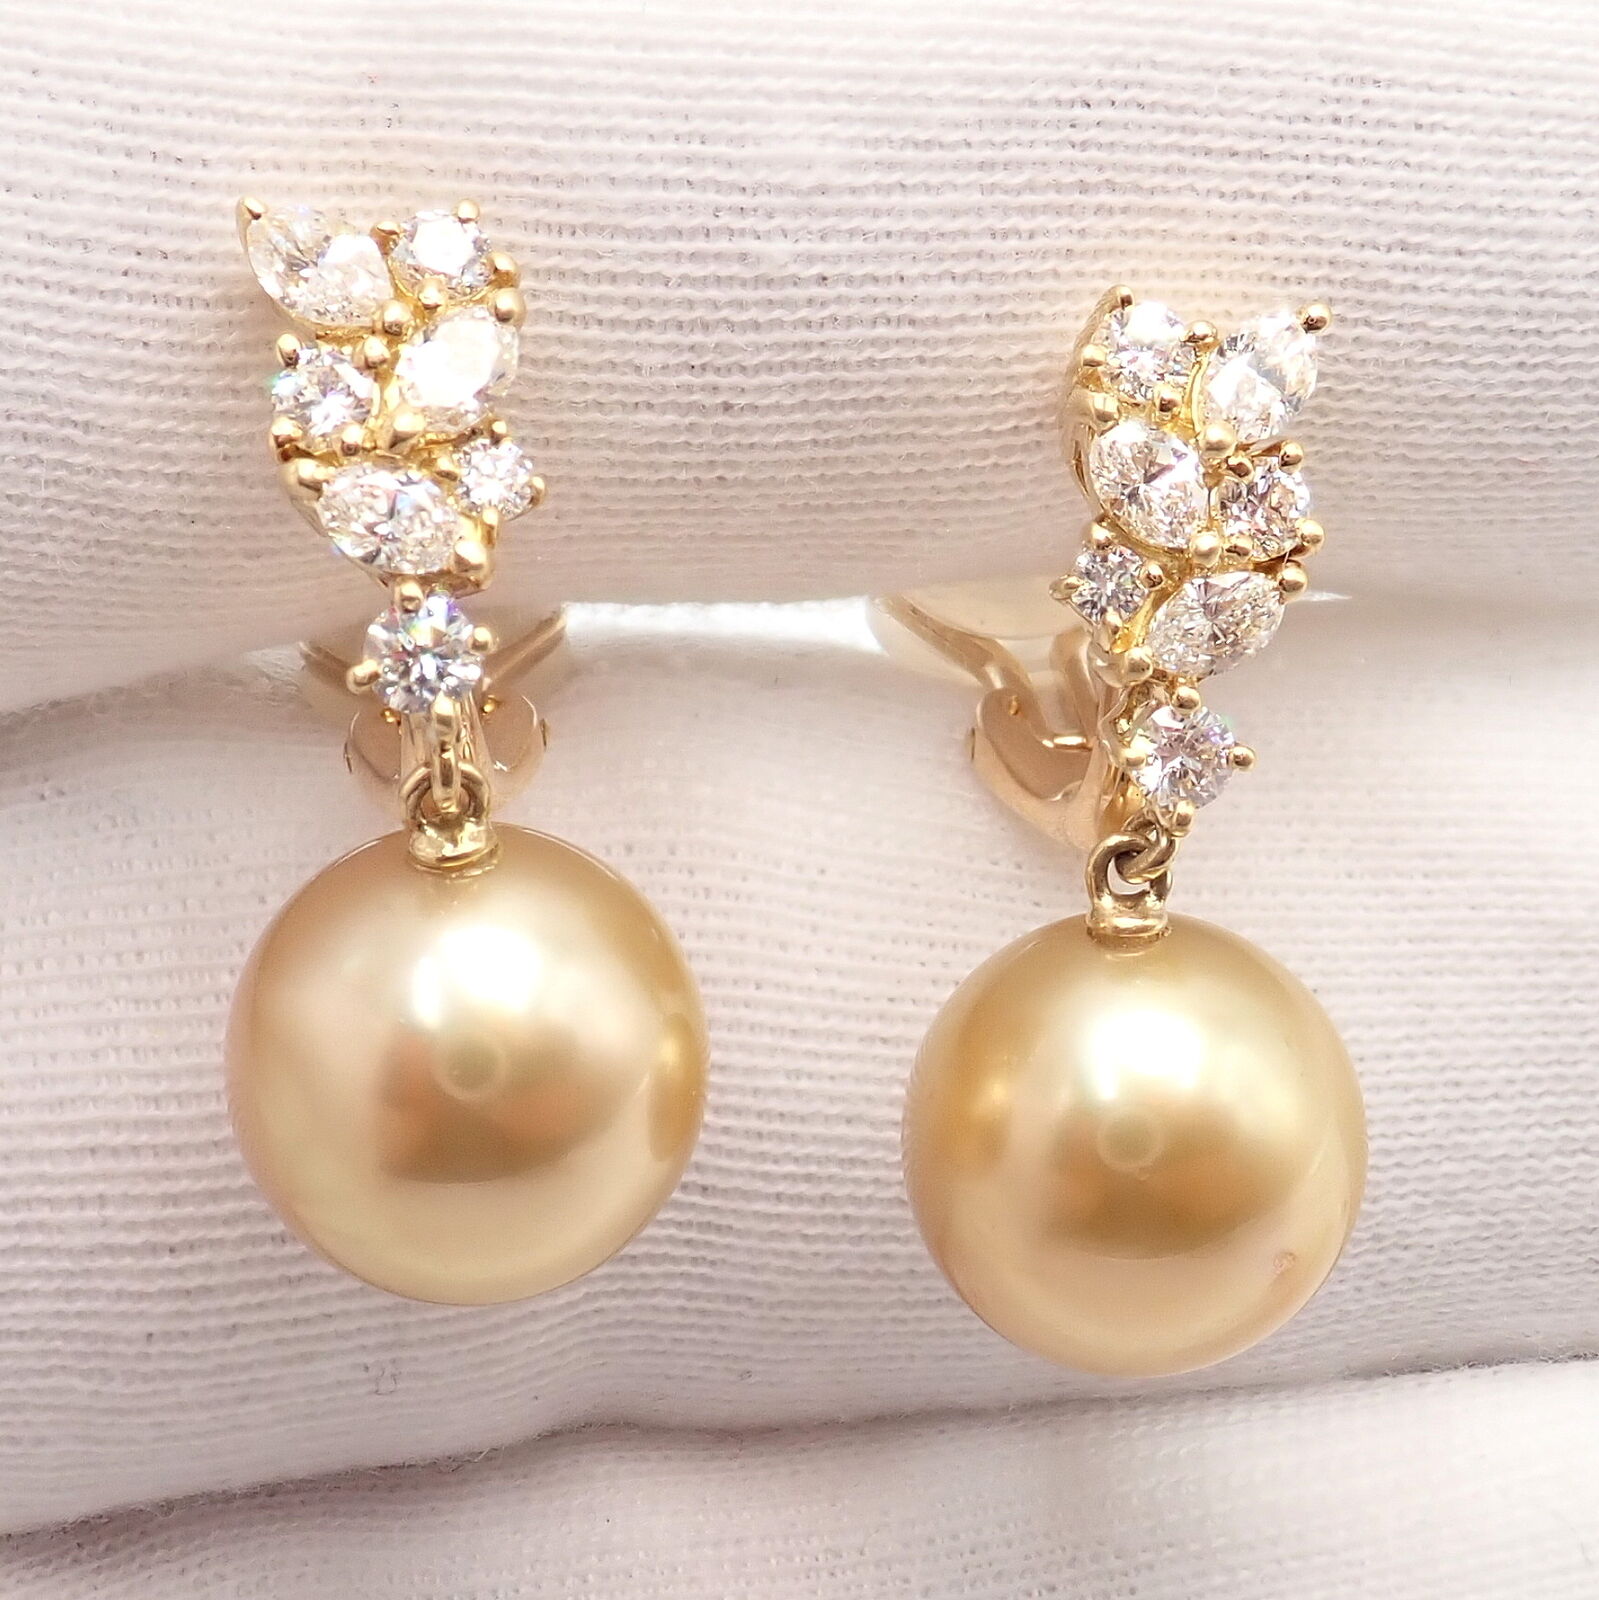 Mikimoto Jewelry & Watches:Fine Jewelry:Earrings Rare Mikimoto 18k Yellow Gold Diamond 11.5mm Golden South Sea Pearl Earrings